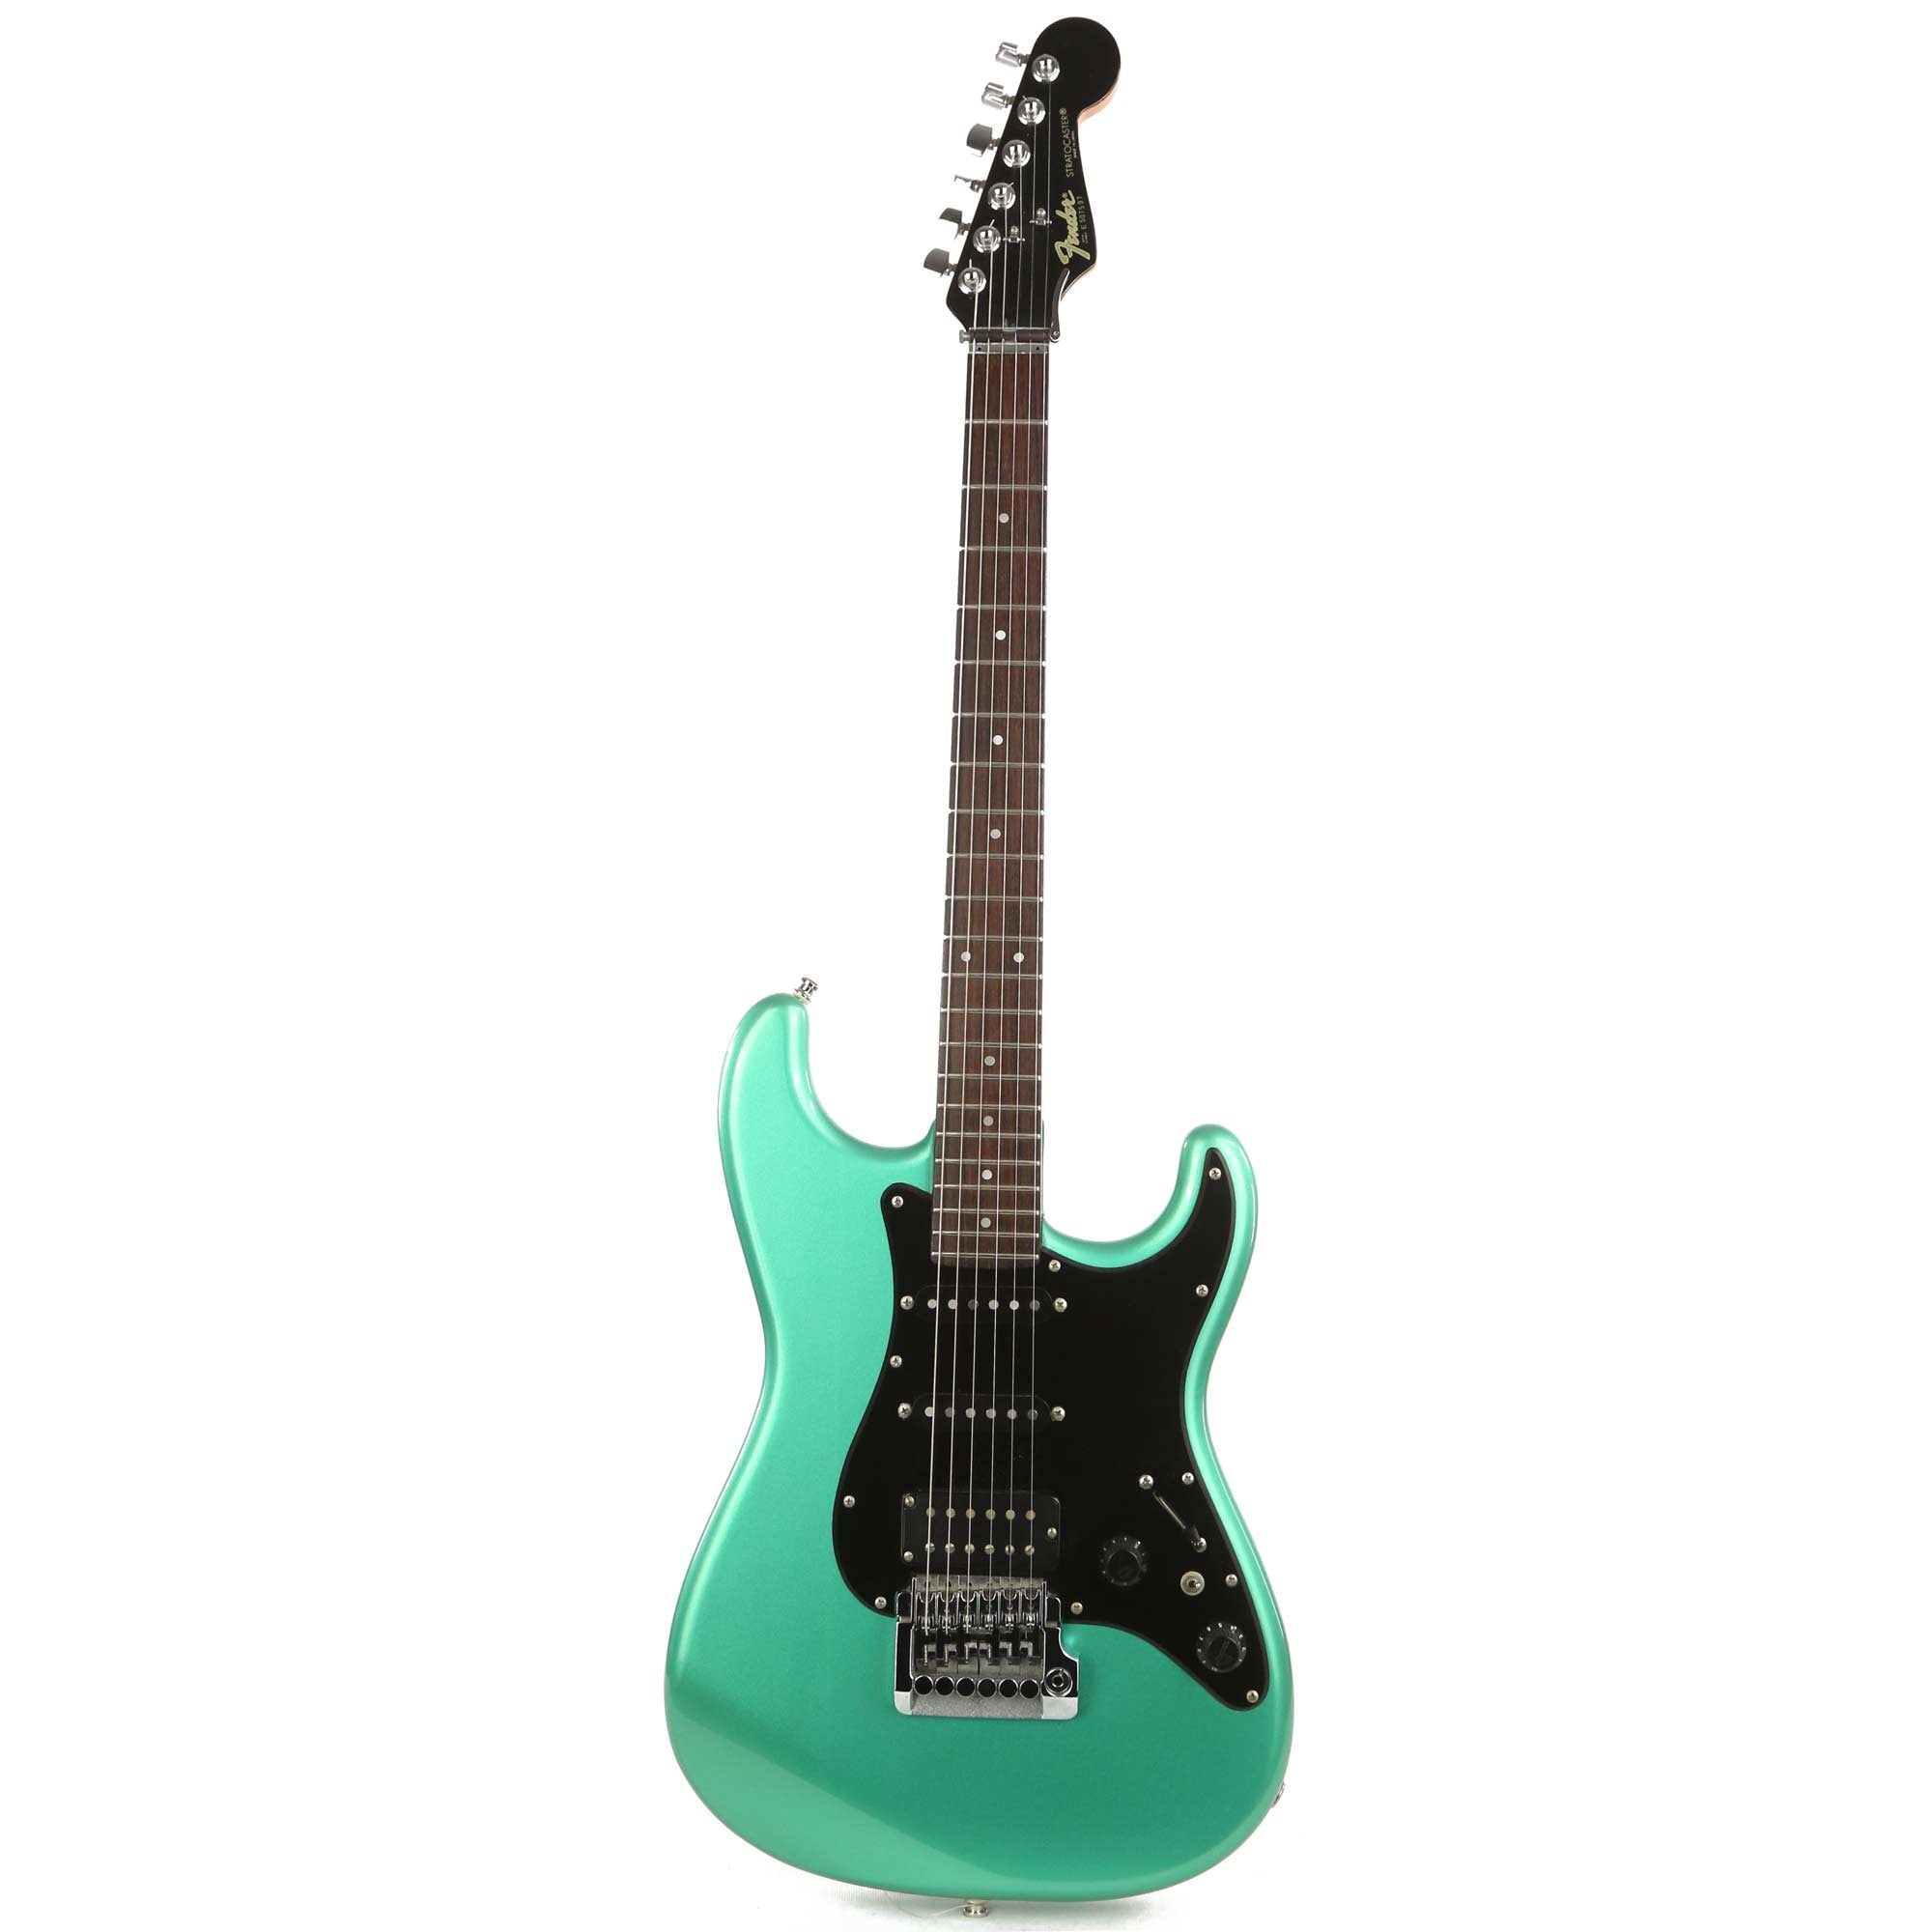 1985 Fender Contemporary Deluxe Stratocaster Metallic Green | The 